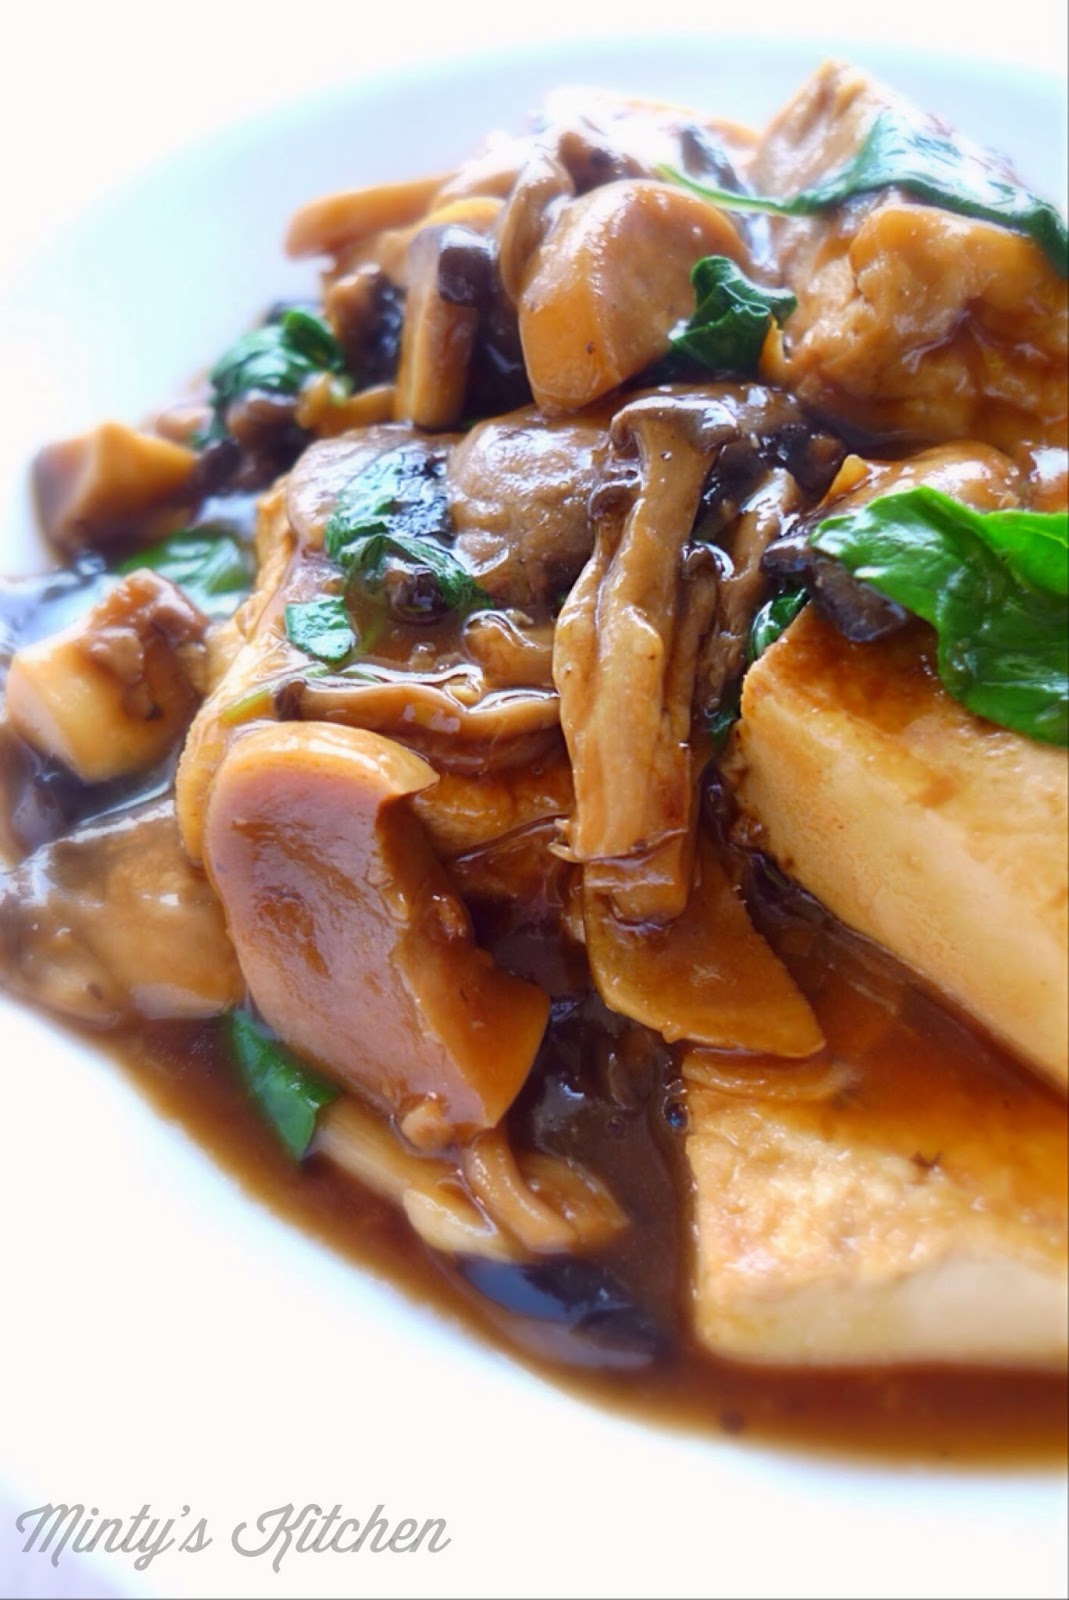 Minty's Kitchen: Braised Tofu and Mushroom With Thai Basil